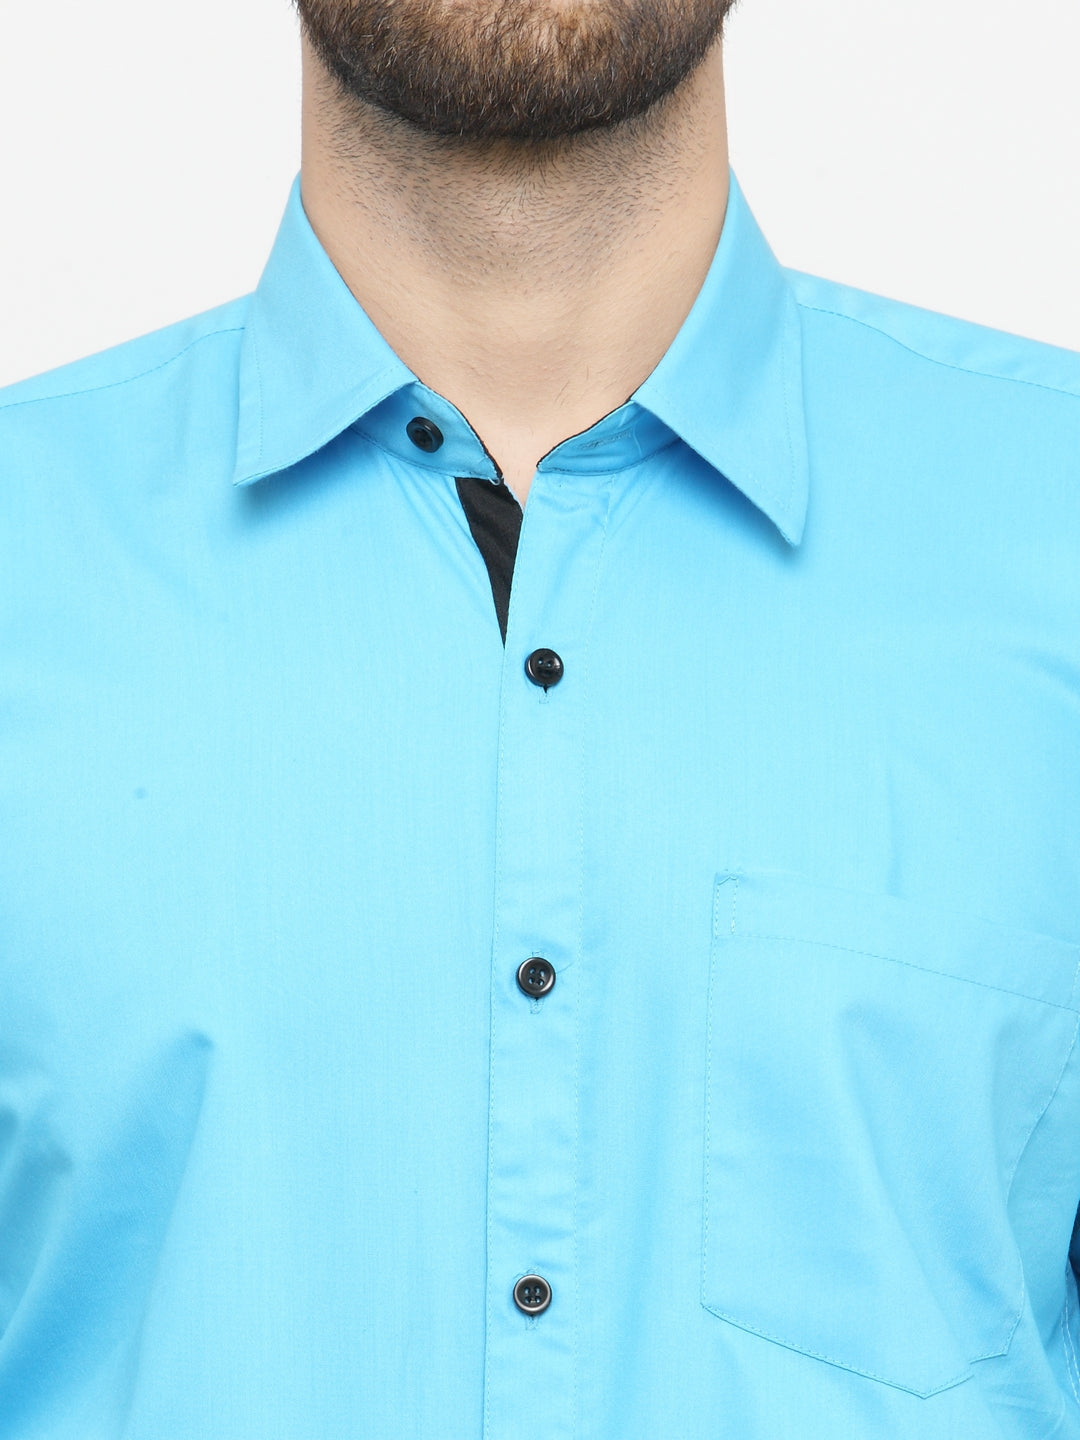 Men's Sky Blue Formal Shirt with black detailing ( SF 411Sky ) - Jainish